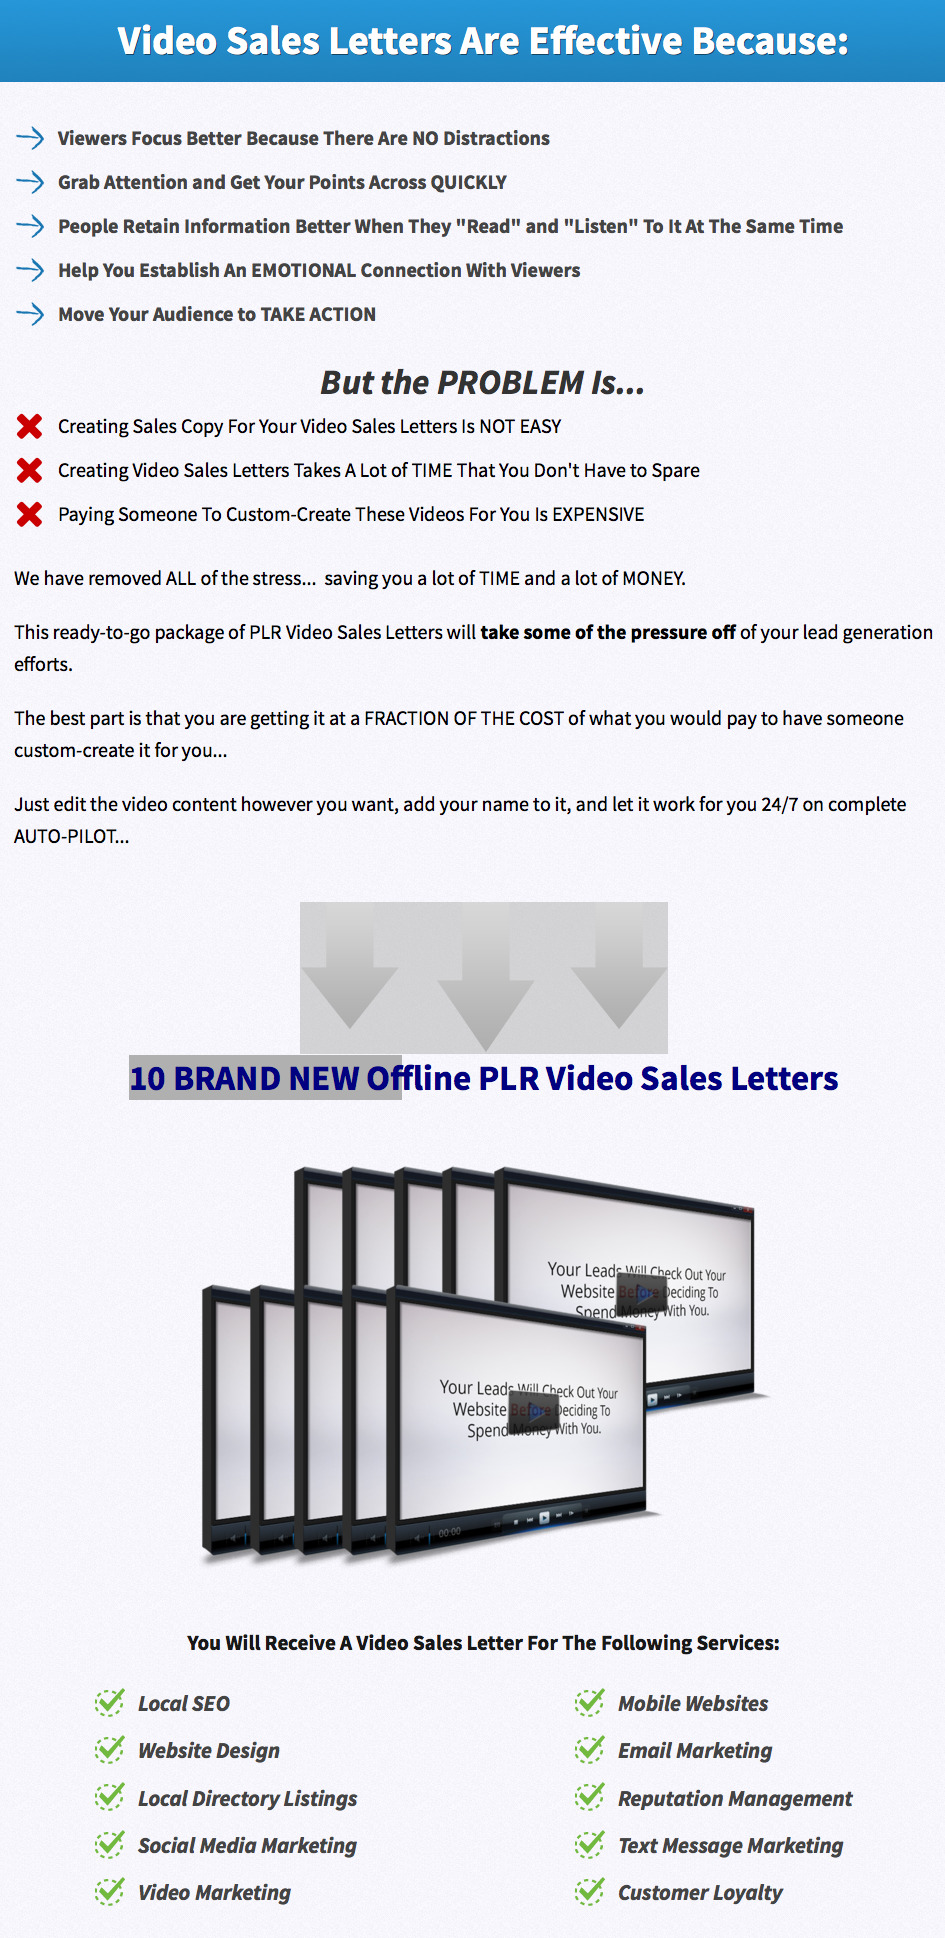 Offline Video Sales Letters PLR Pack